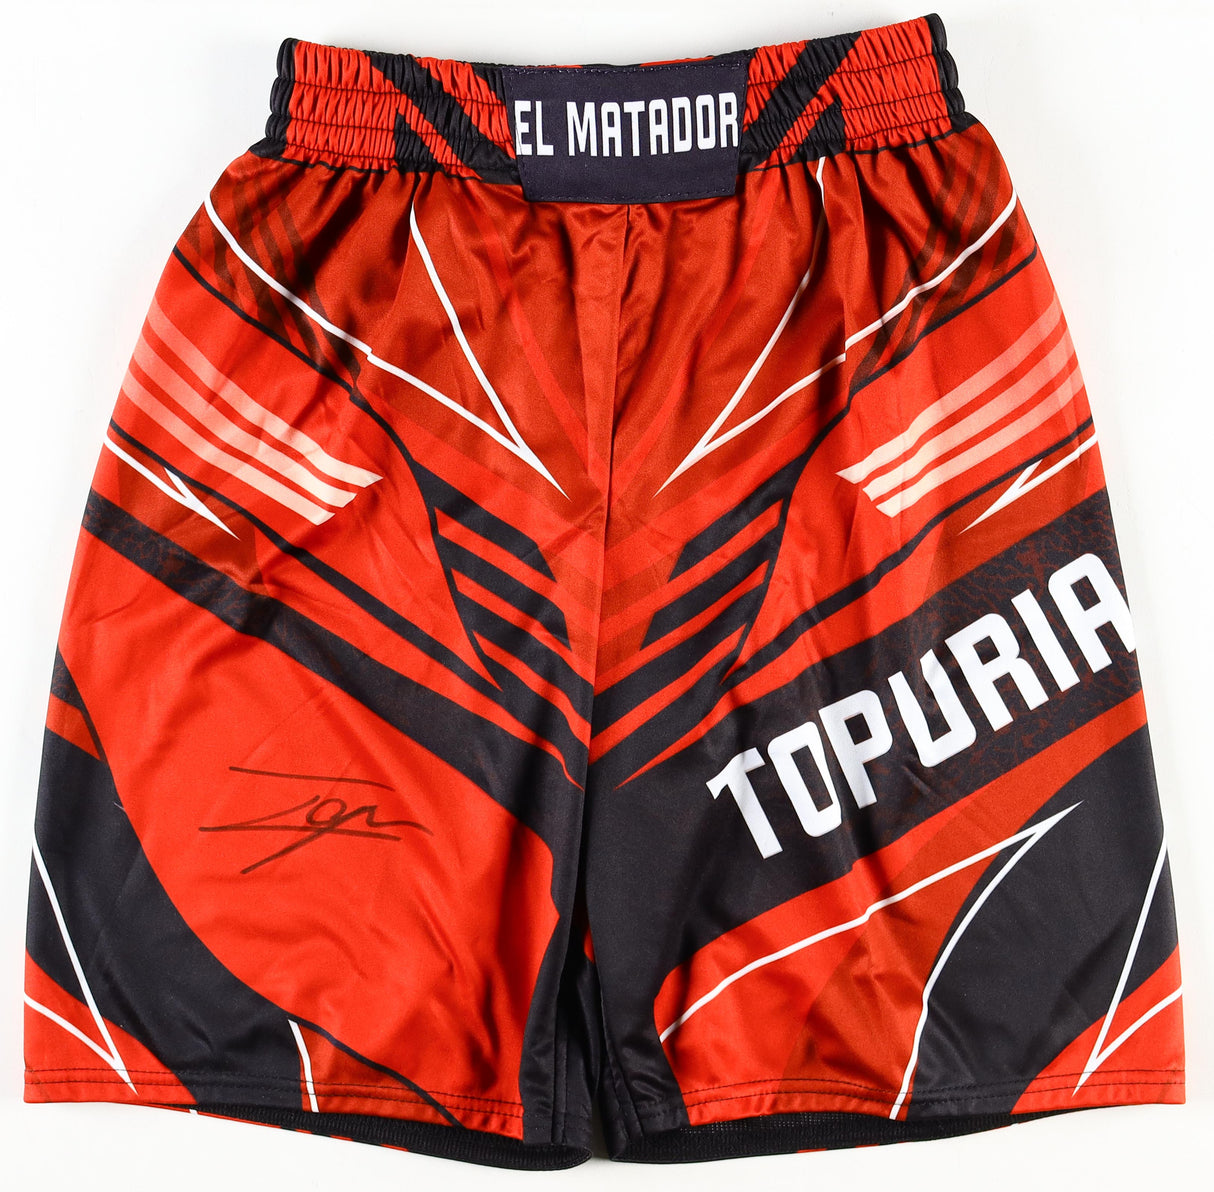 Ilia Topuria Signed UFC Fight Shorts (Beckett Witnessed)